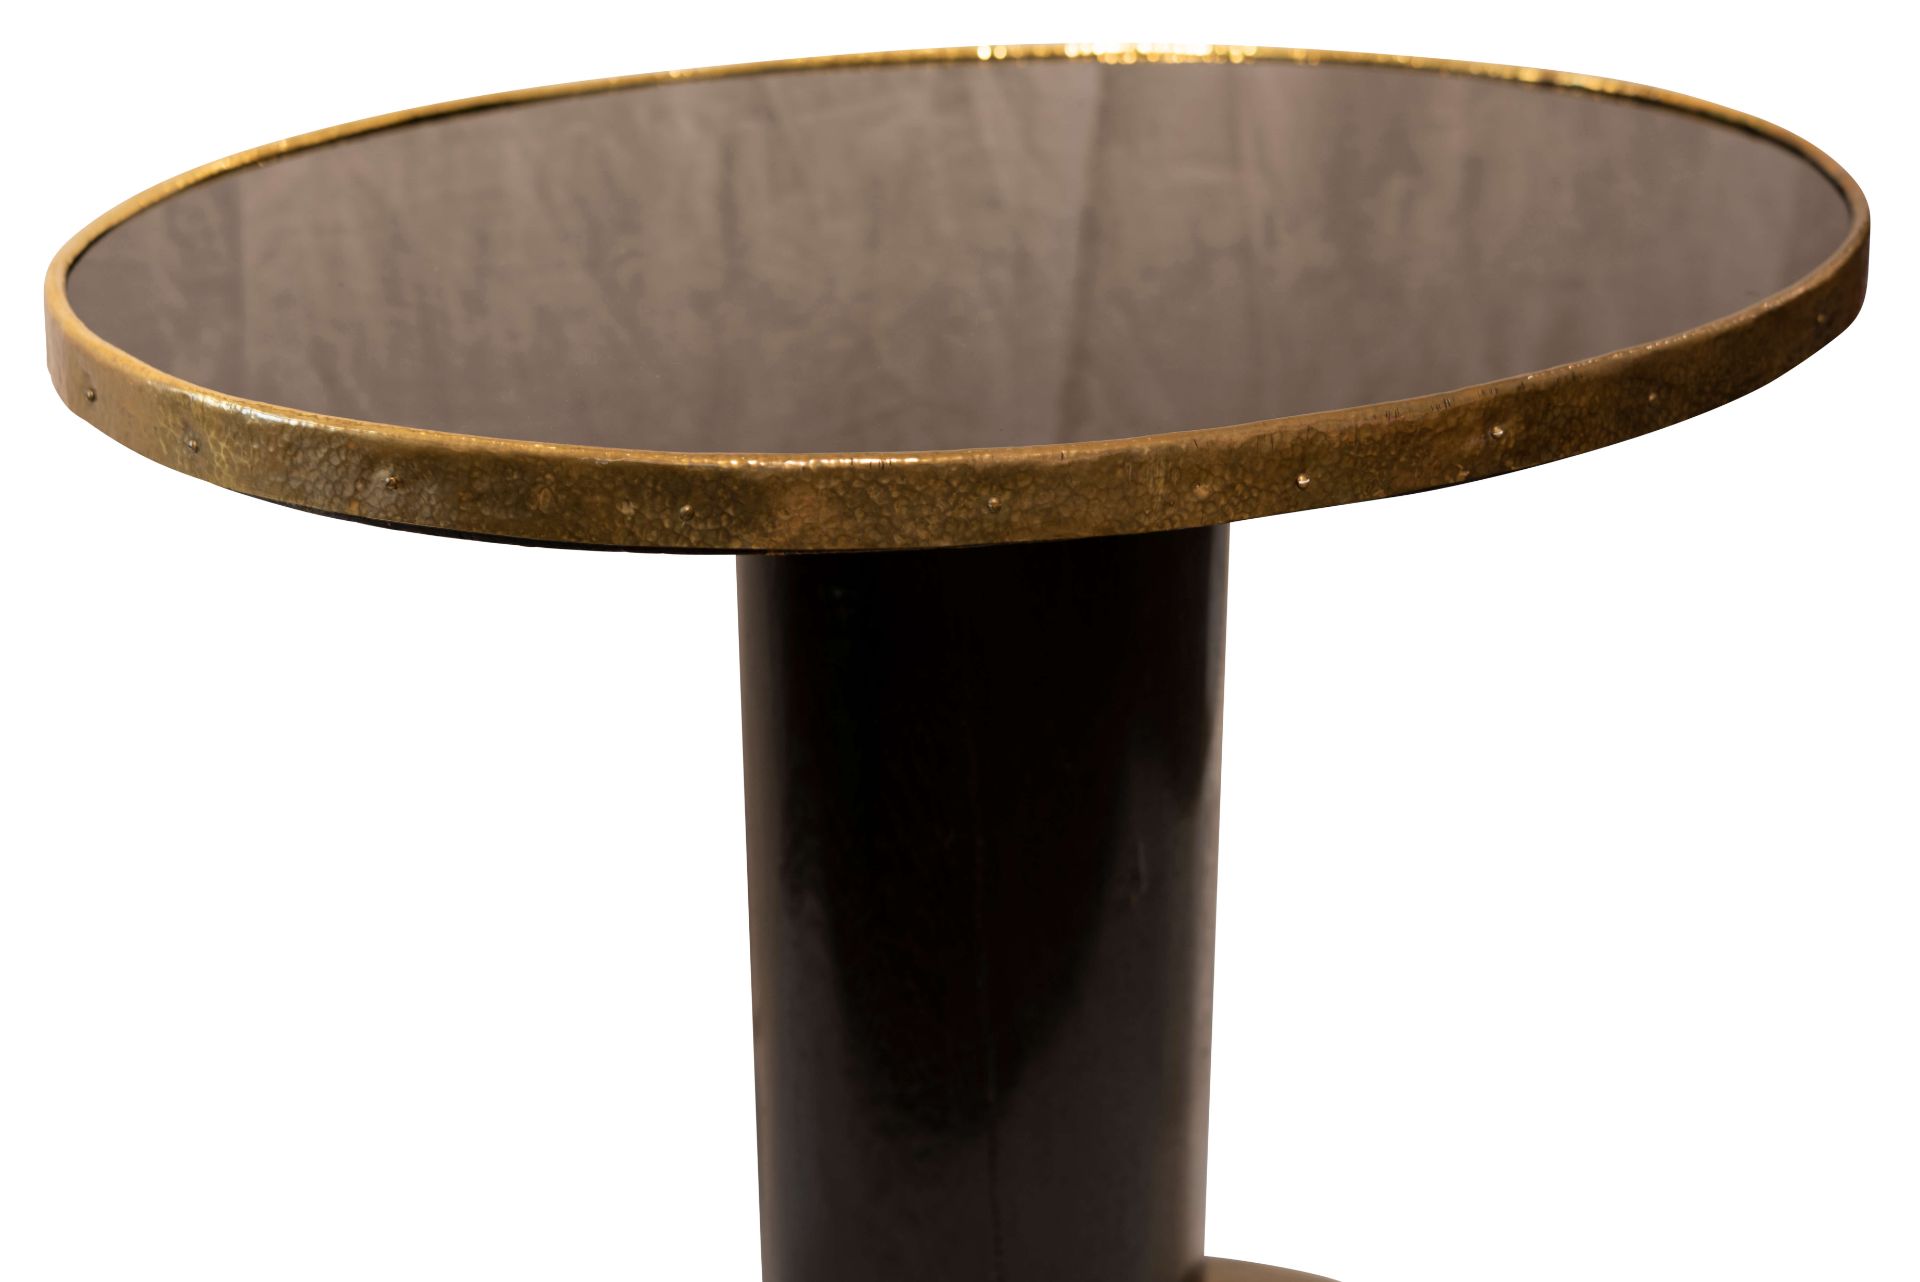 Jugendstil Beistelltisch mit Säulenfuß | Art Deco Table with Column Base - Image 3 of 5